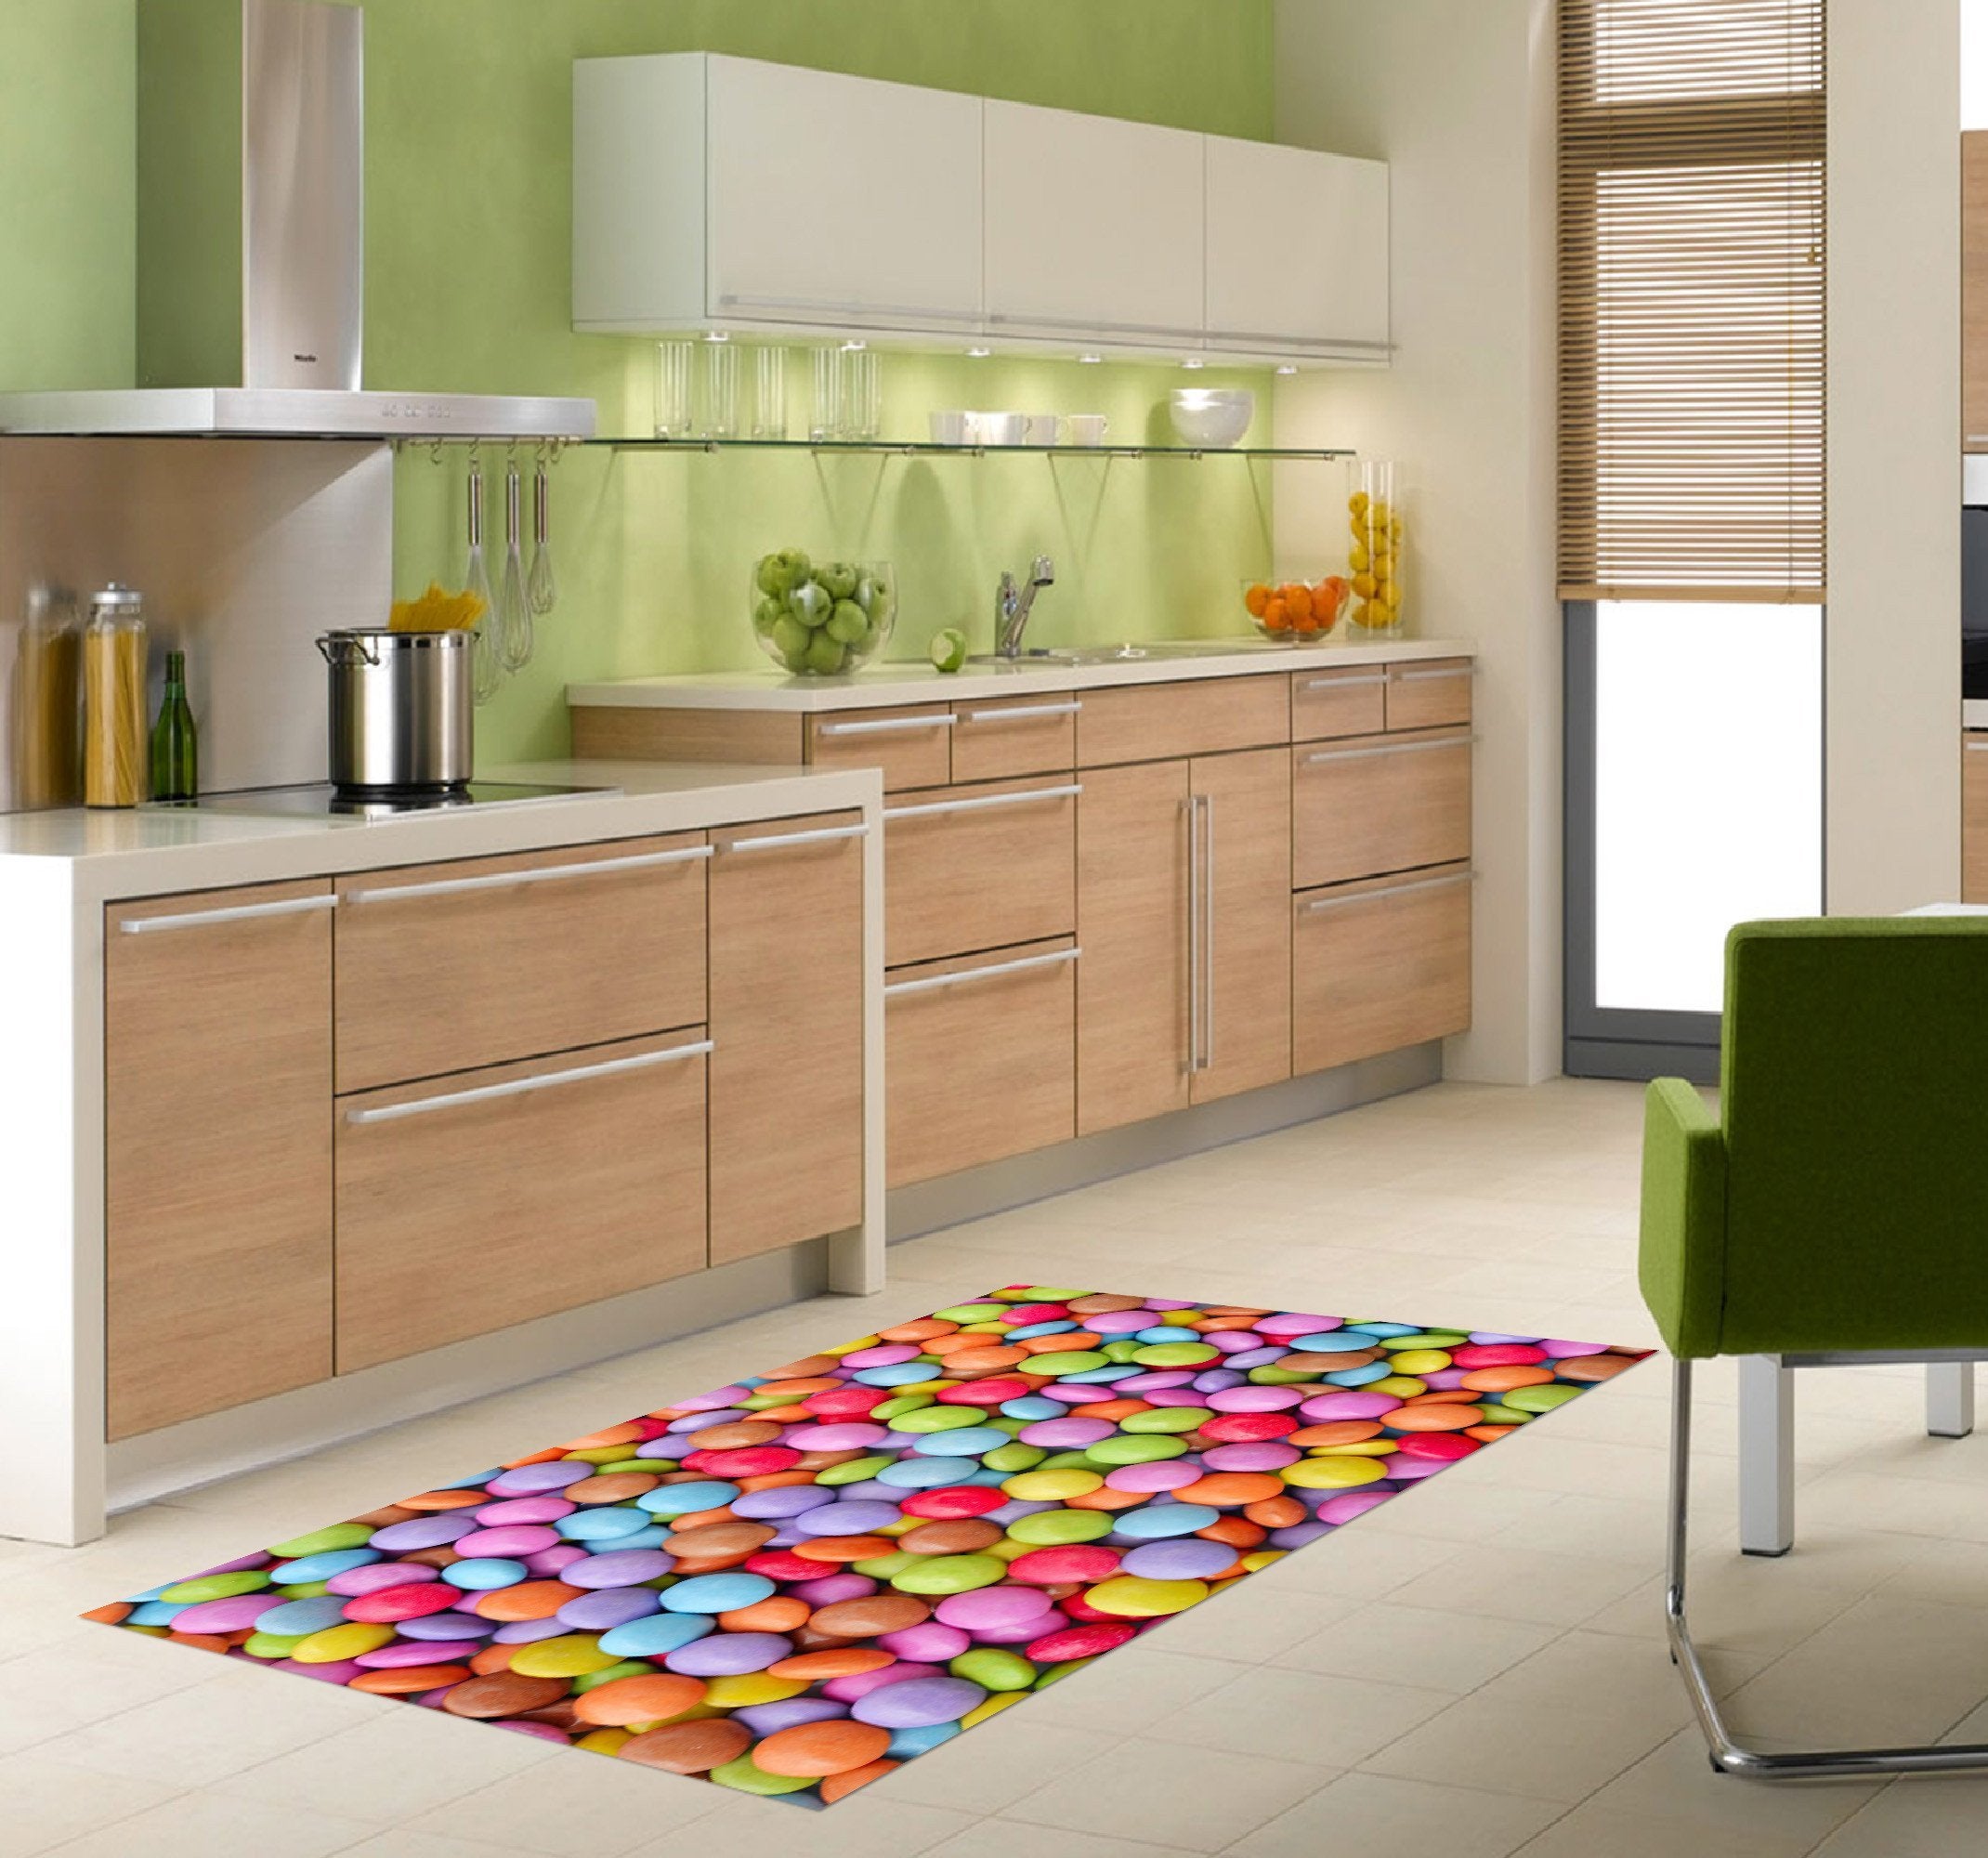 3D Color Candies 065 Kitchen Mat Floor Mural Wallpaper AJ Wallpaper 